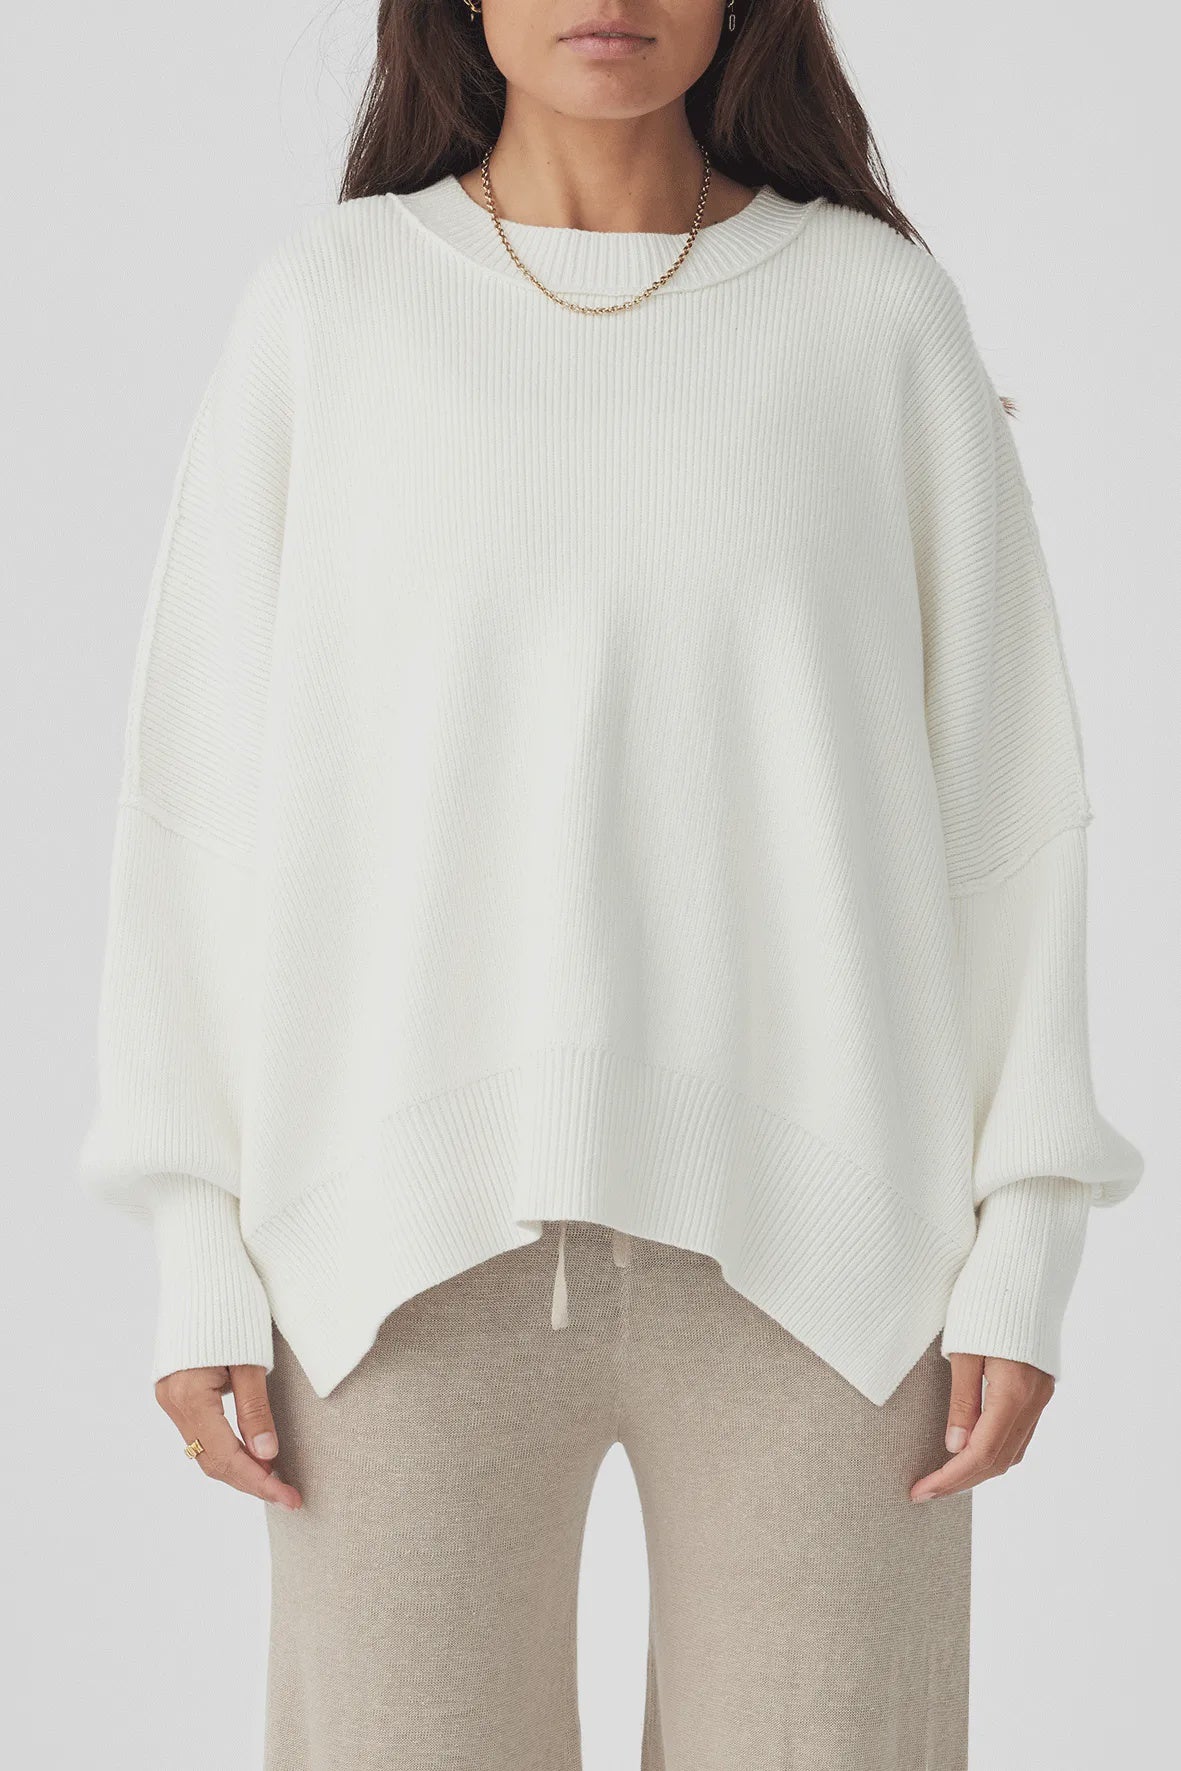 Arcaa Movement | Harper Organic Knit Sweater - Cream